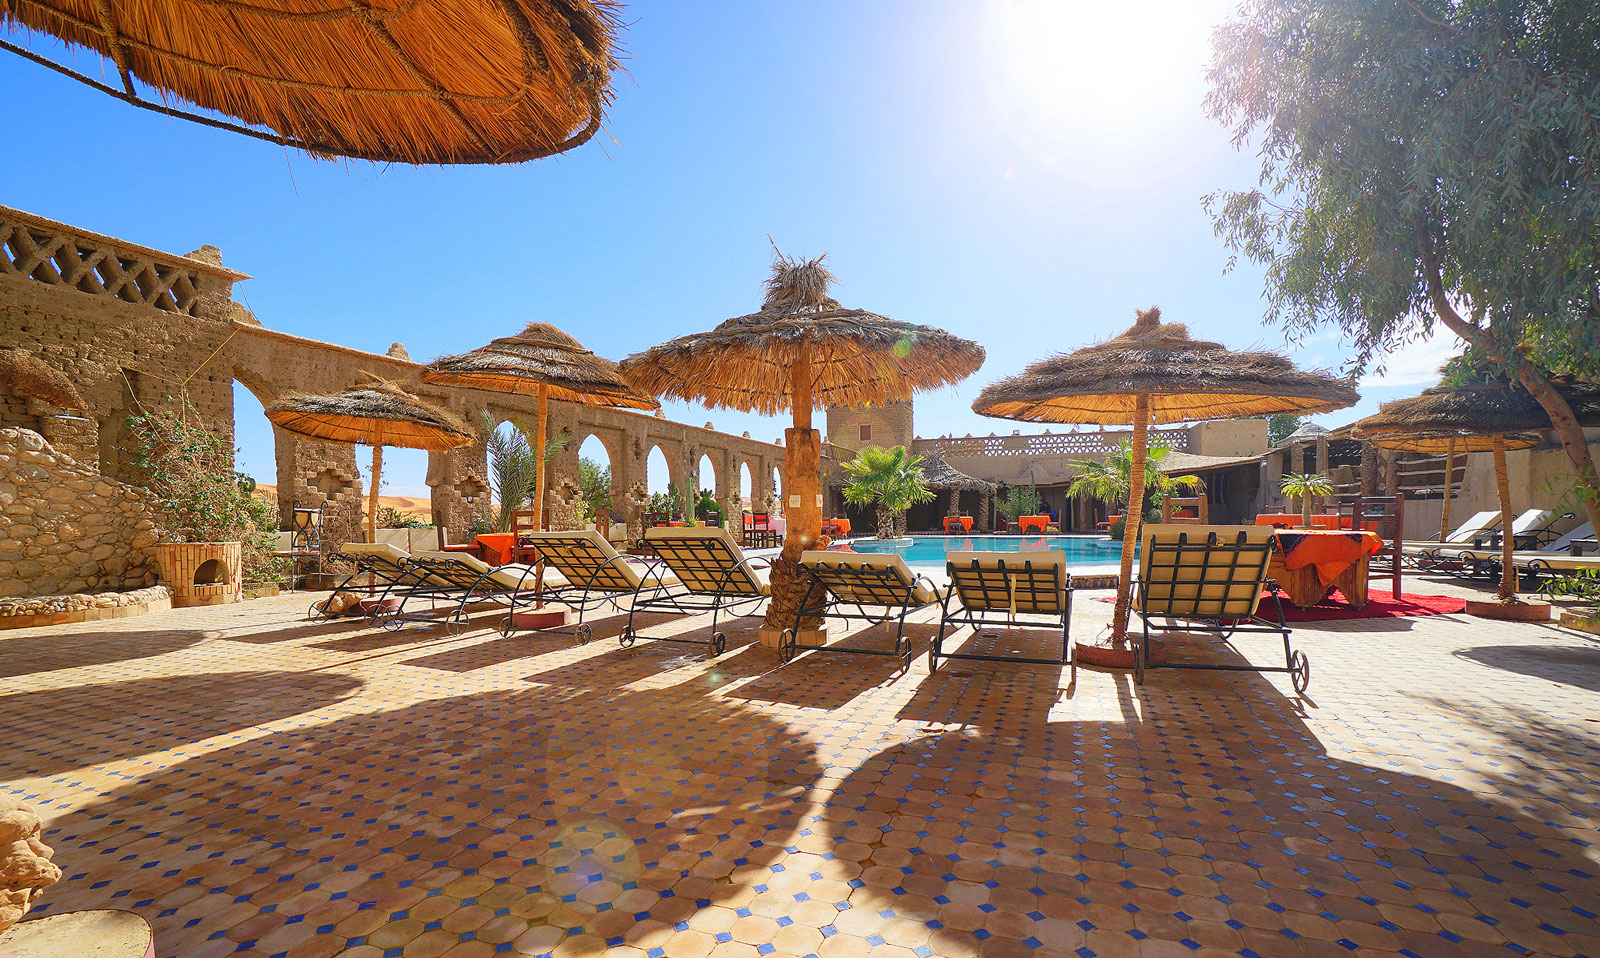 Cafe du Sud - Erg Chebbi Dunes, Hotel Merzouga Morocco